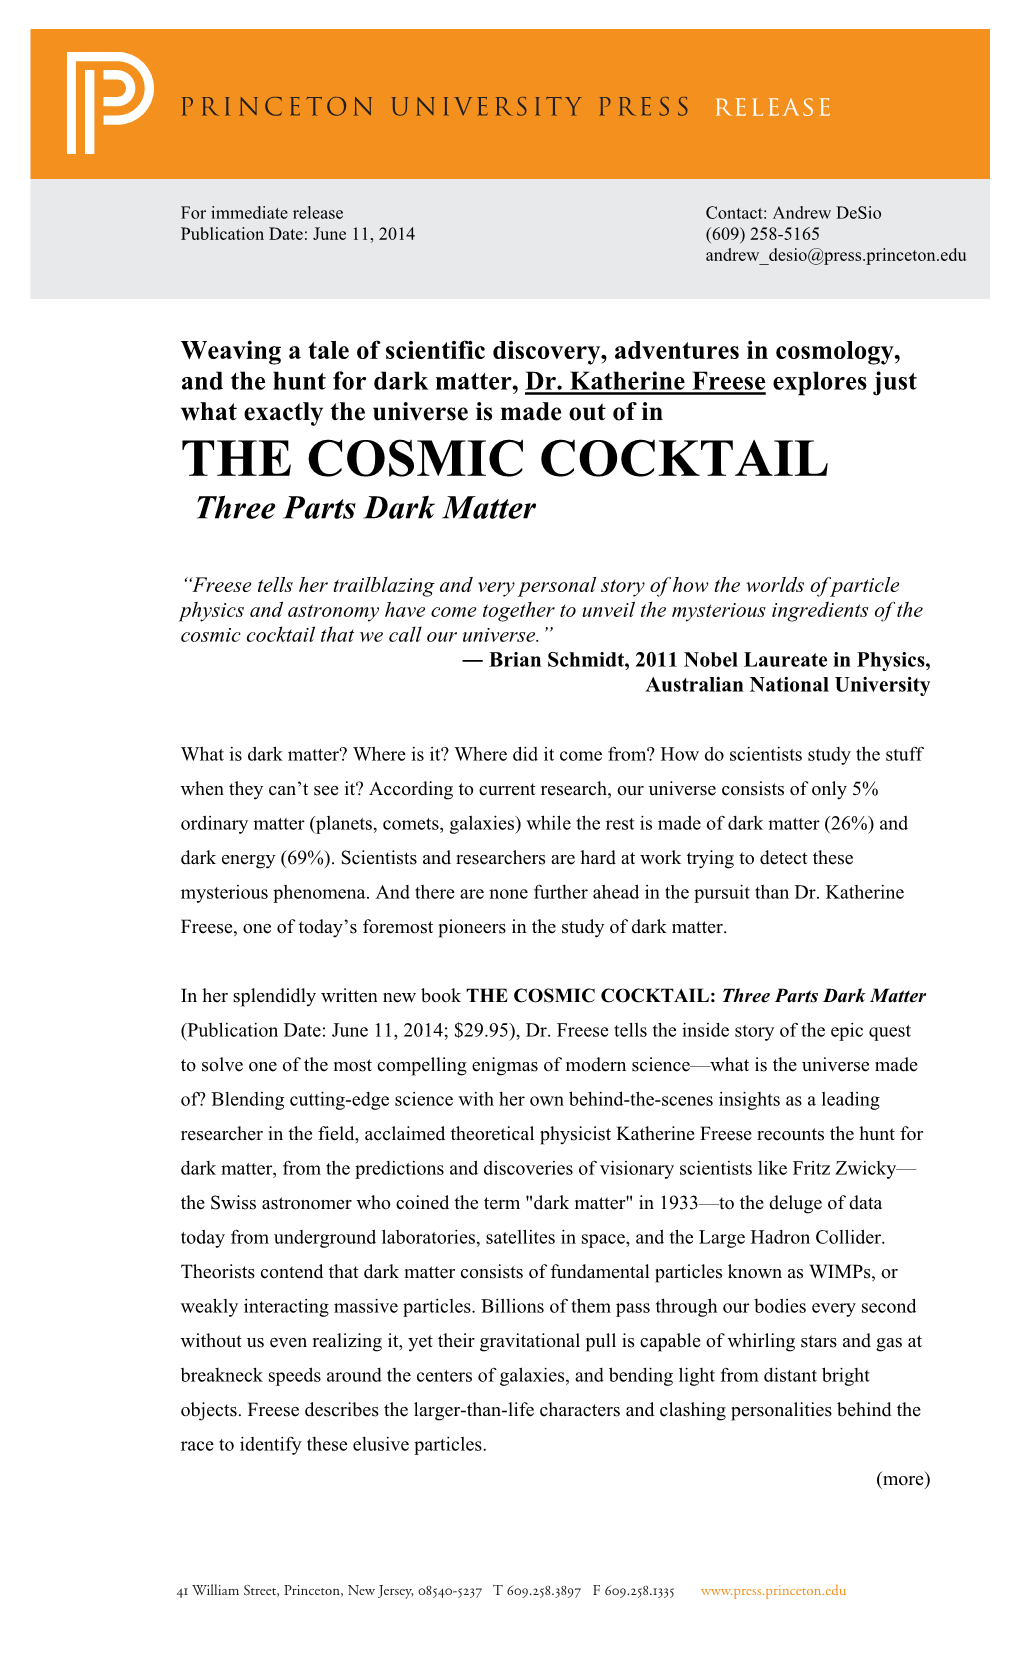 THE COSMIC COCKTAIL Three Parts Dark Matter